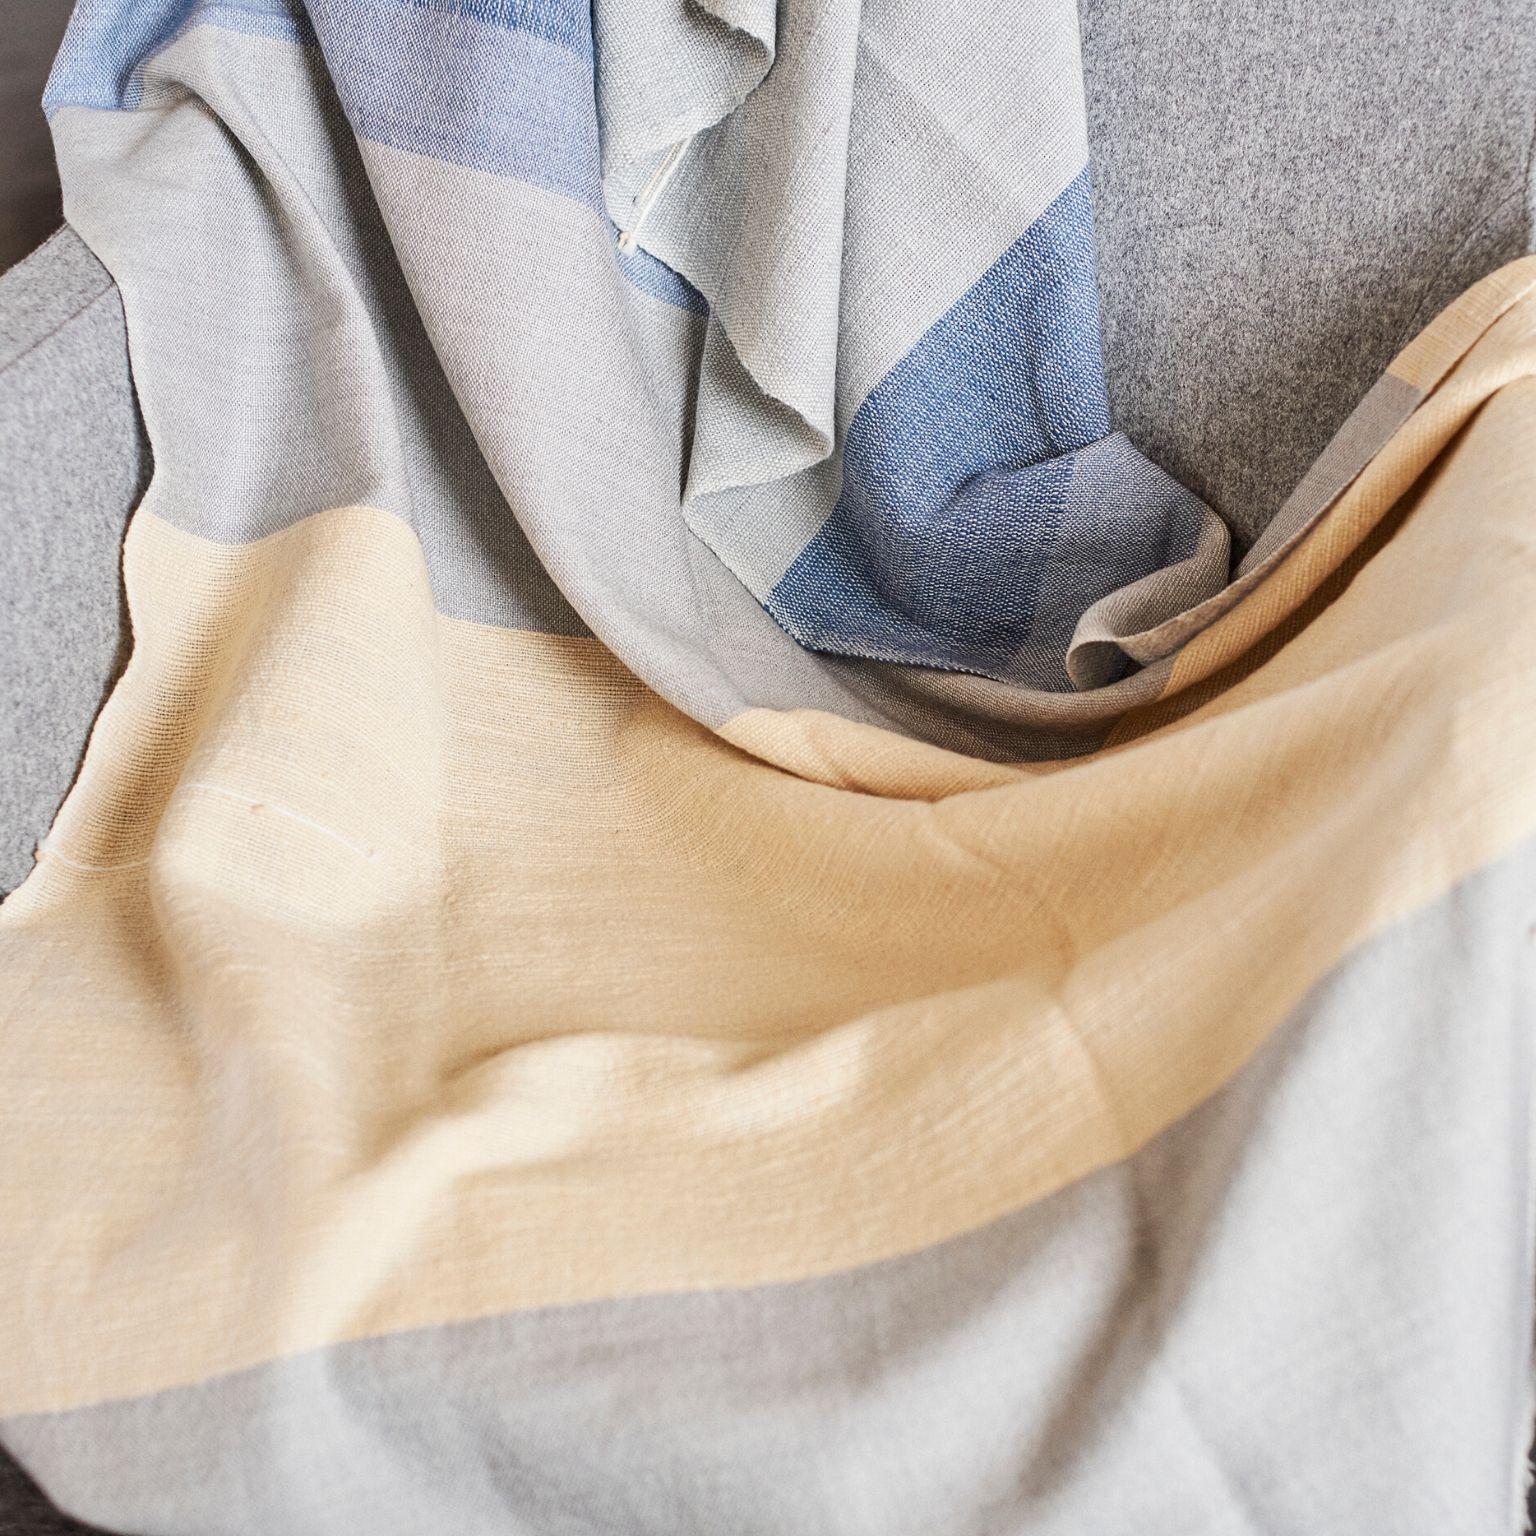 Ceru Handloom Merino Throw / Blanket in Neutral Shades of Cream & Serene Blue For Sale 5